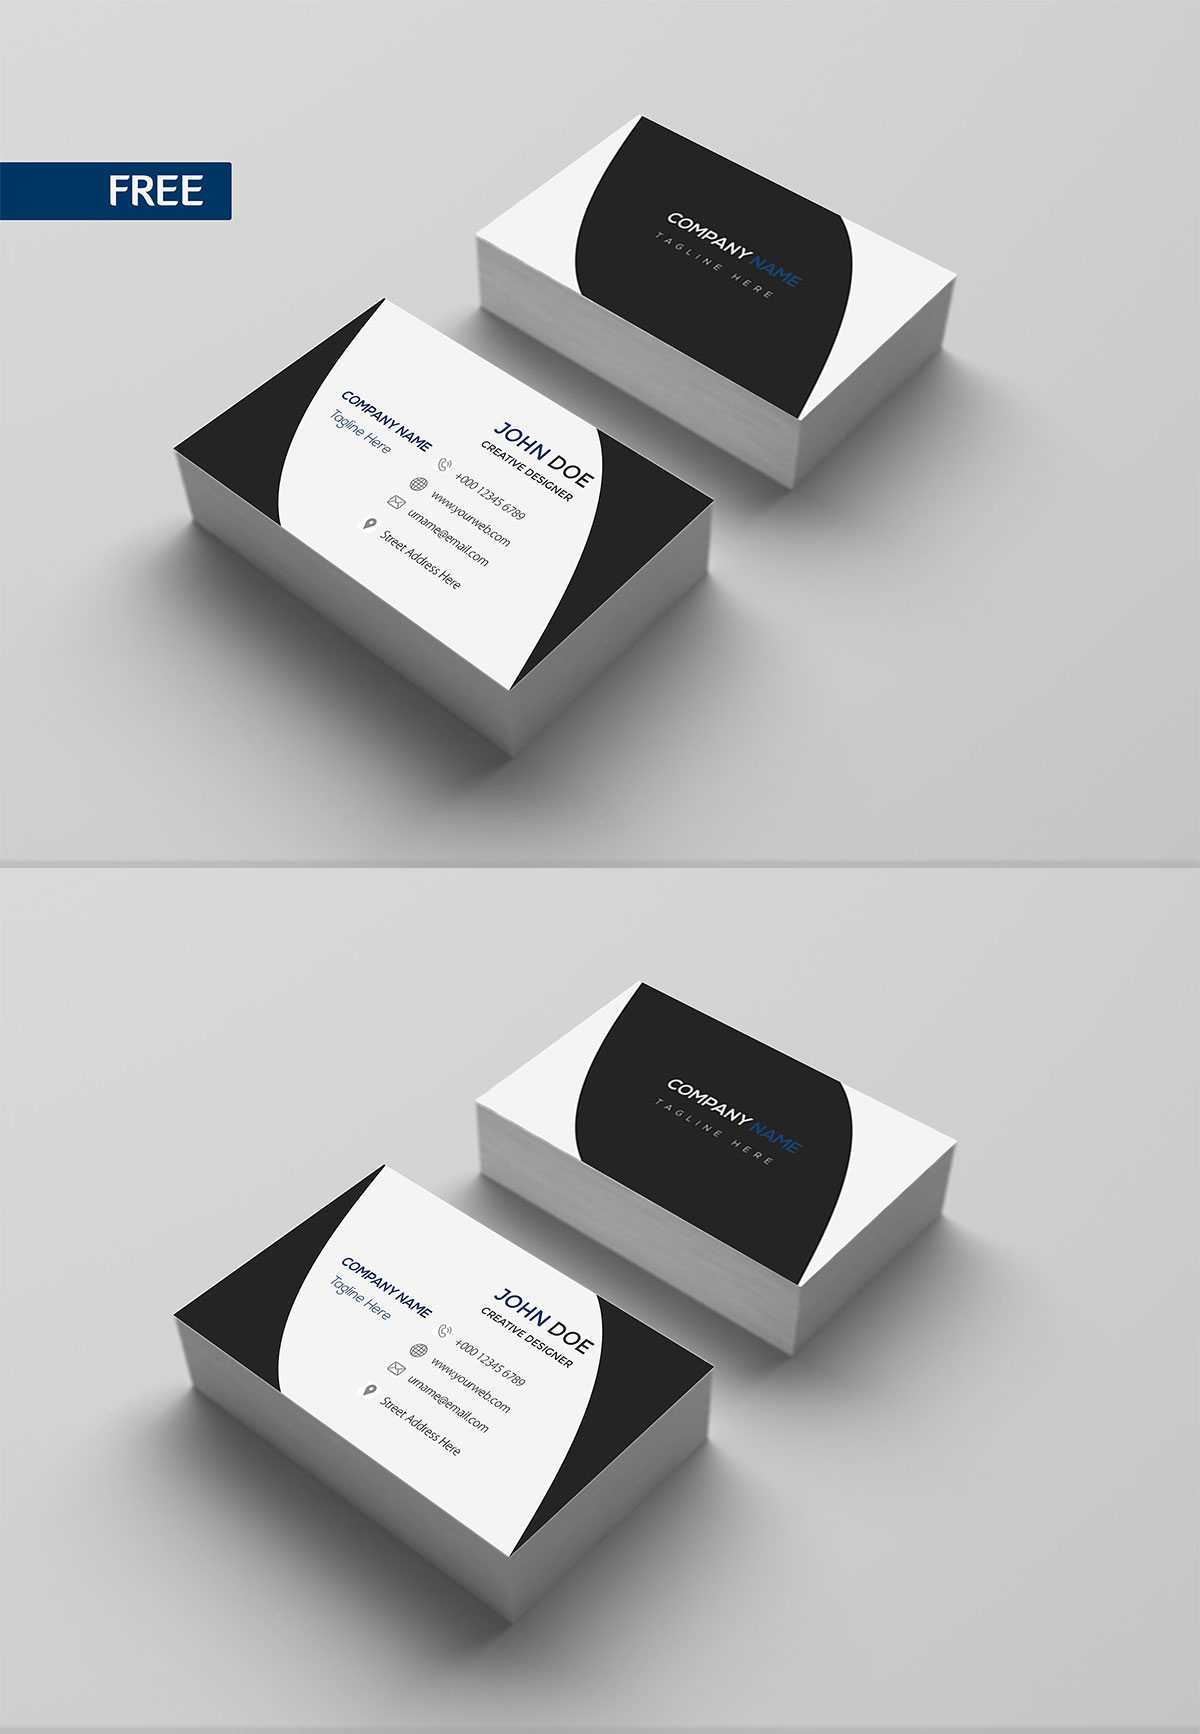 Free Print Design Business Card Template – Creativetacos In Photoshop Cs6 Business Card Template